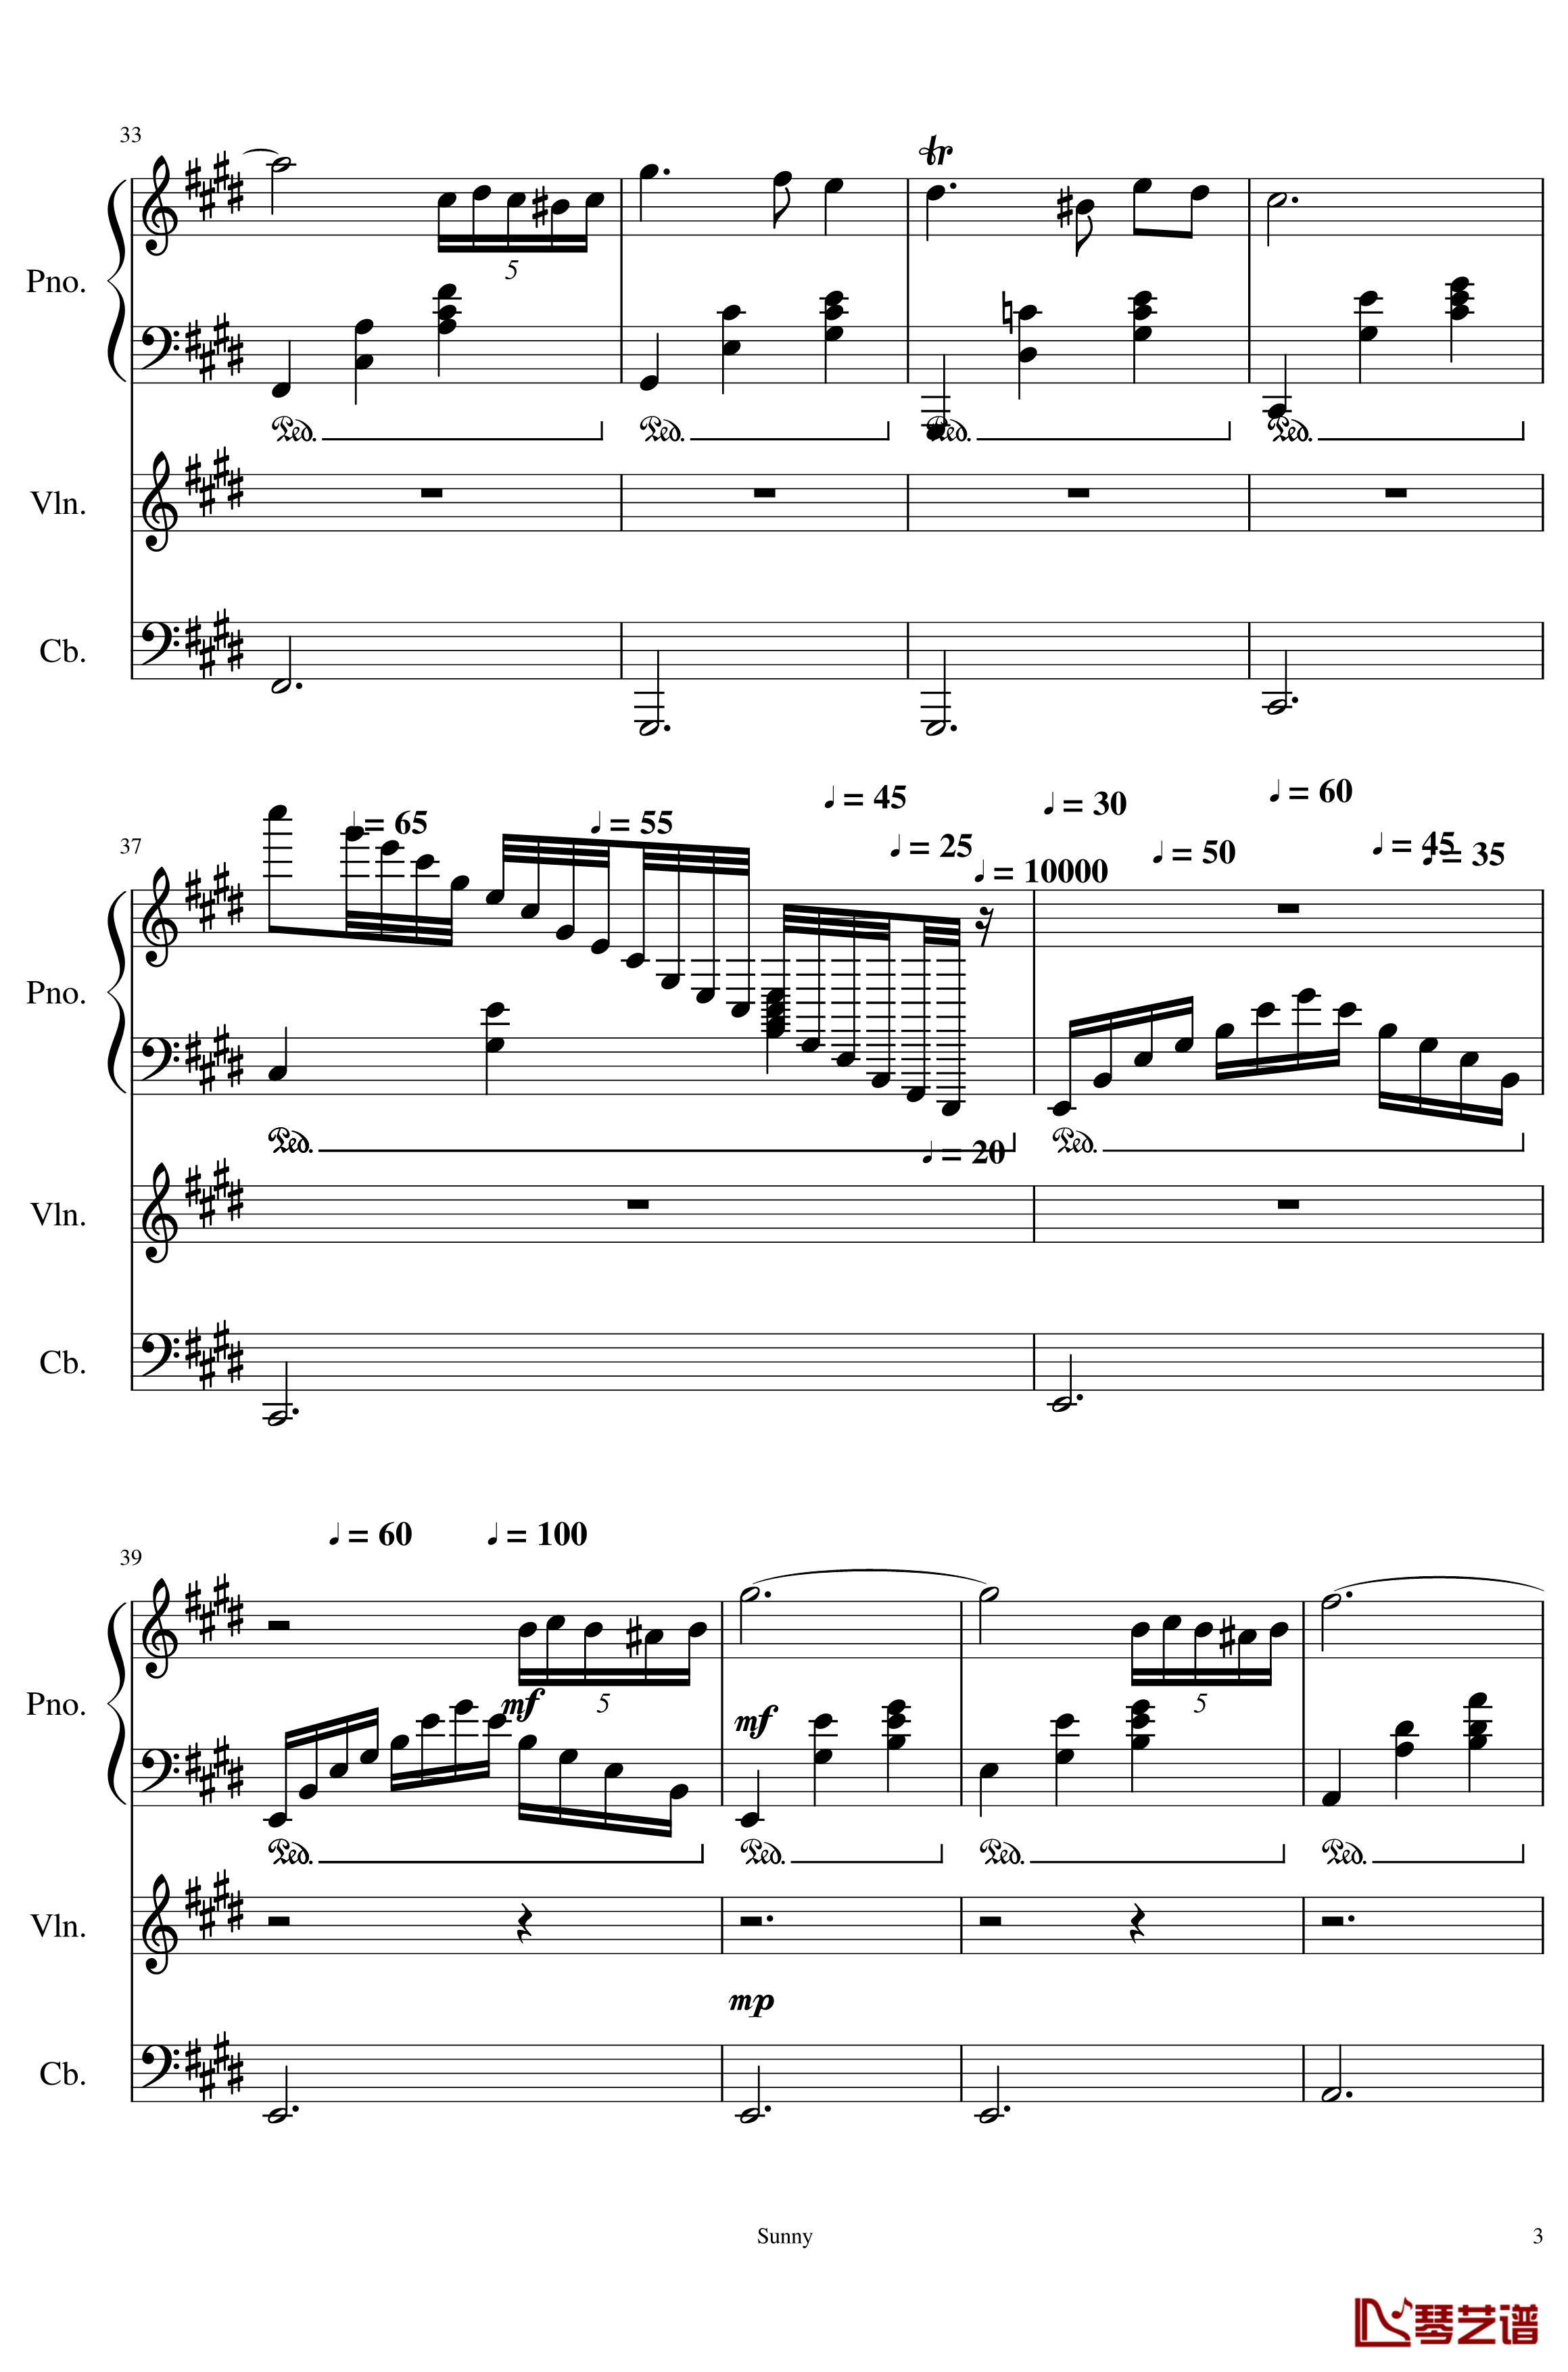 Op.1-2 钢琴谱-最苦与最乐-SunnyAK473